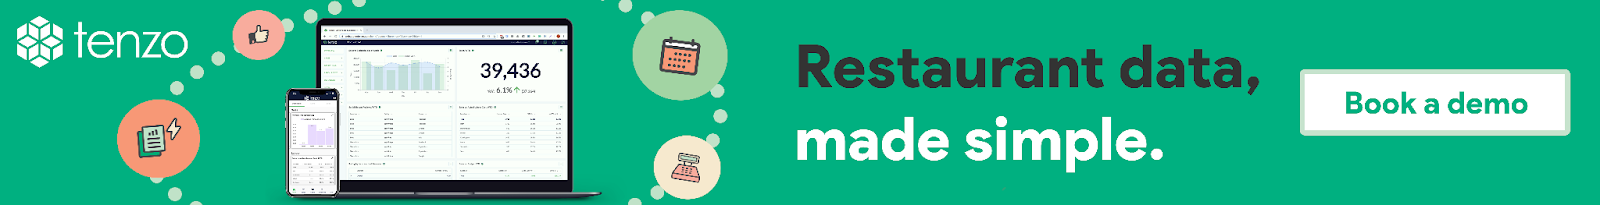 restaurant data made simple